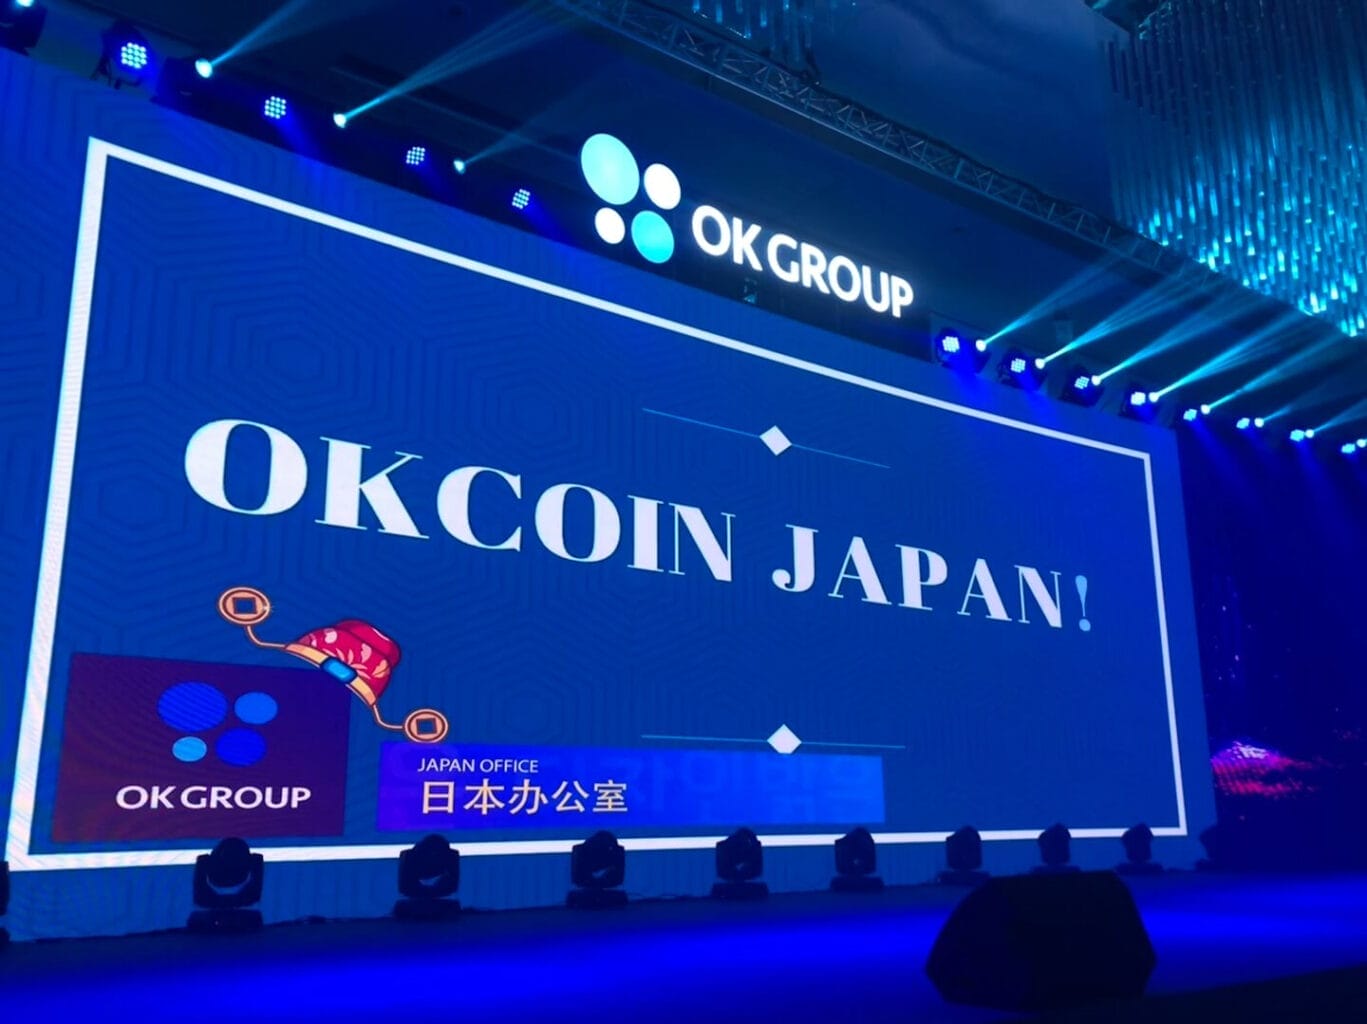 OKCoin Japan Tezos Corporate Baker